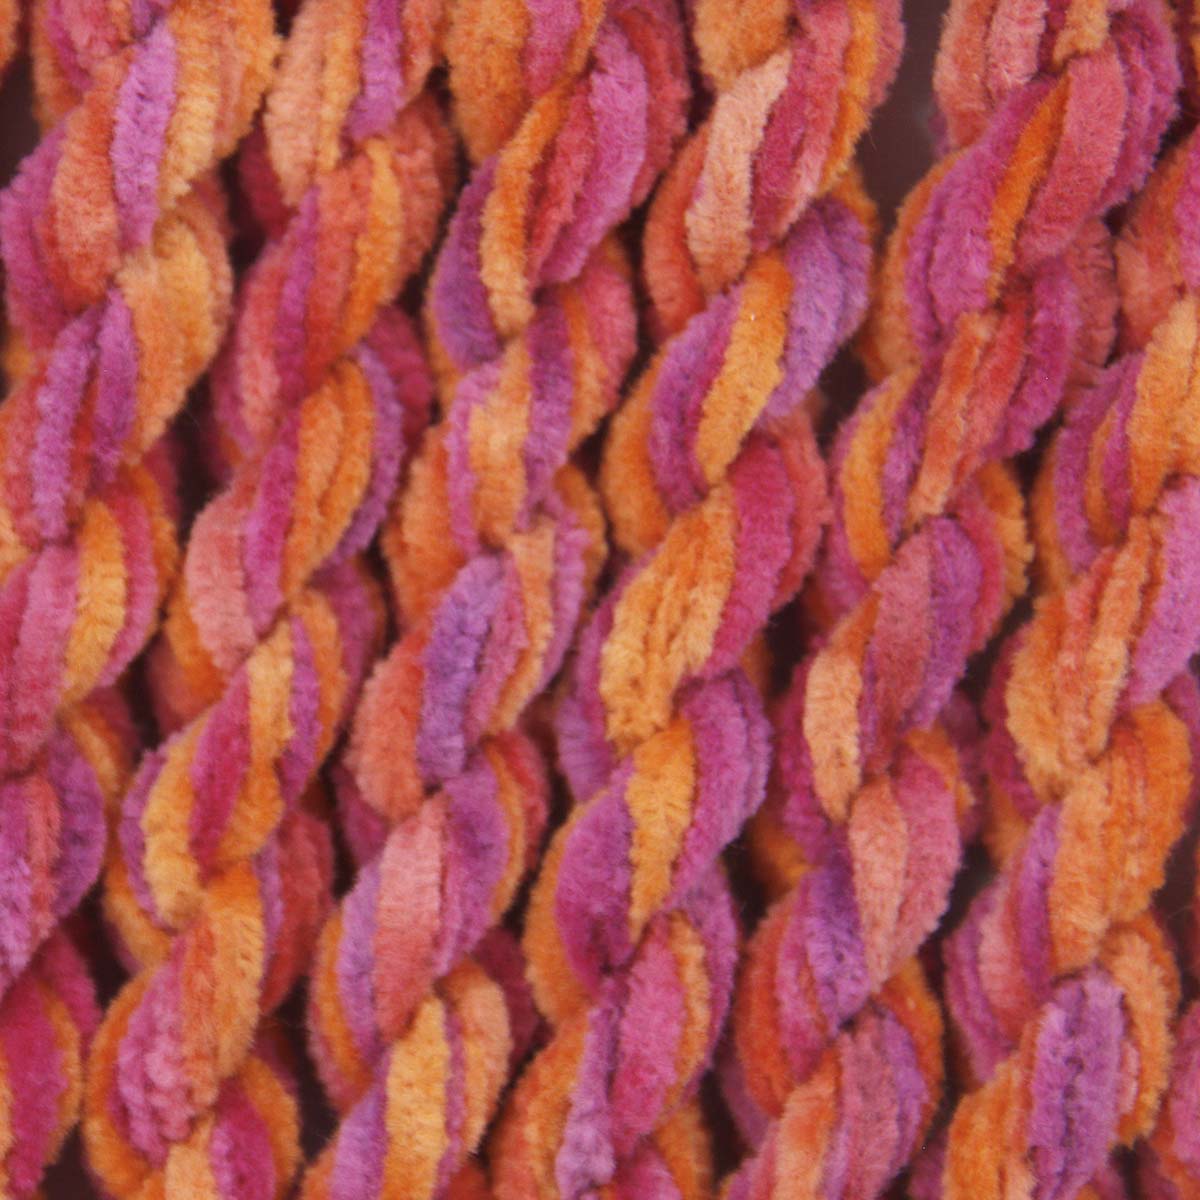 www.colourstreams.com.au Colour Streams Hand Dyed Chenille Threads Slow Stitch Embroidery Textile Arts Fibre DL 28 Carnivale Purple Pinks Oranges